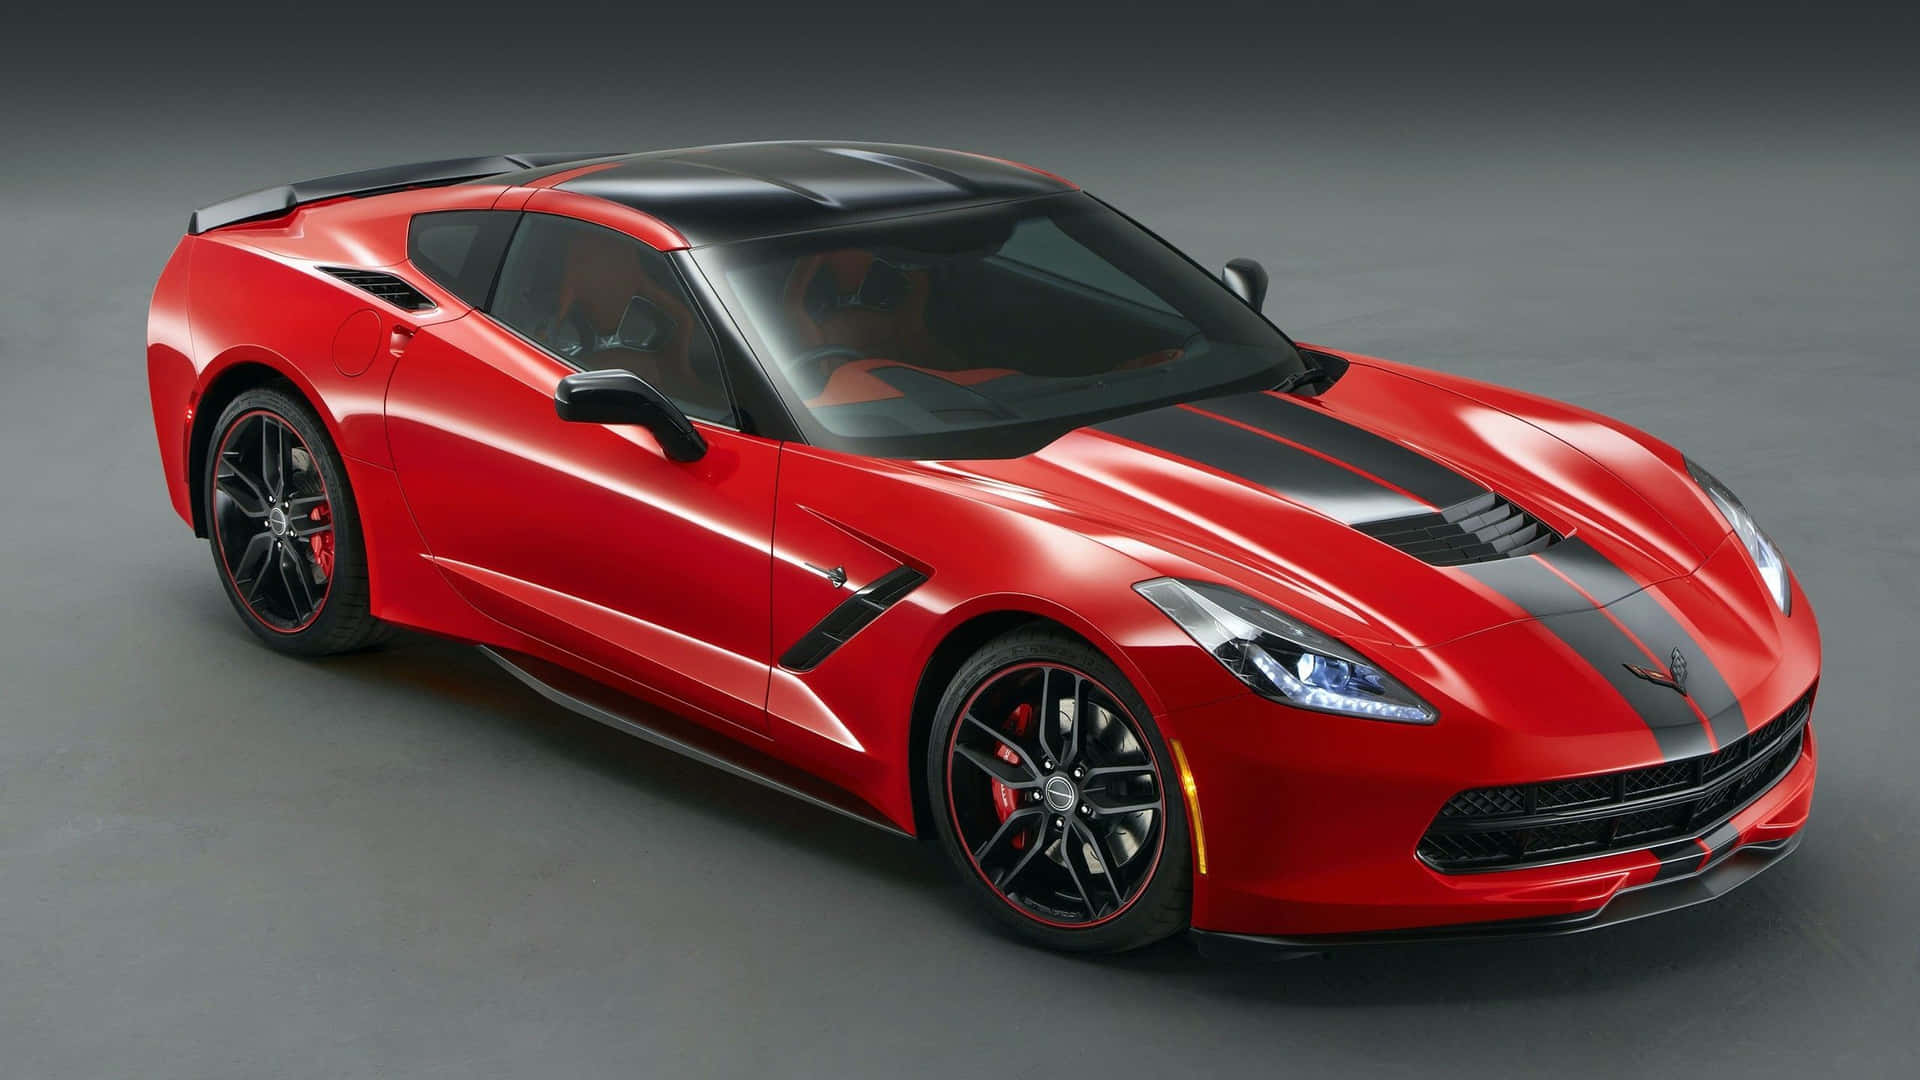 Impresionantechevrolet Corvette Grand Sport En Movimiento. Fondo de pantalla